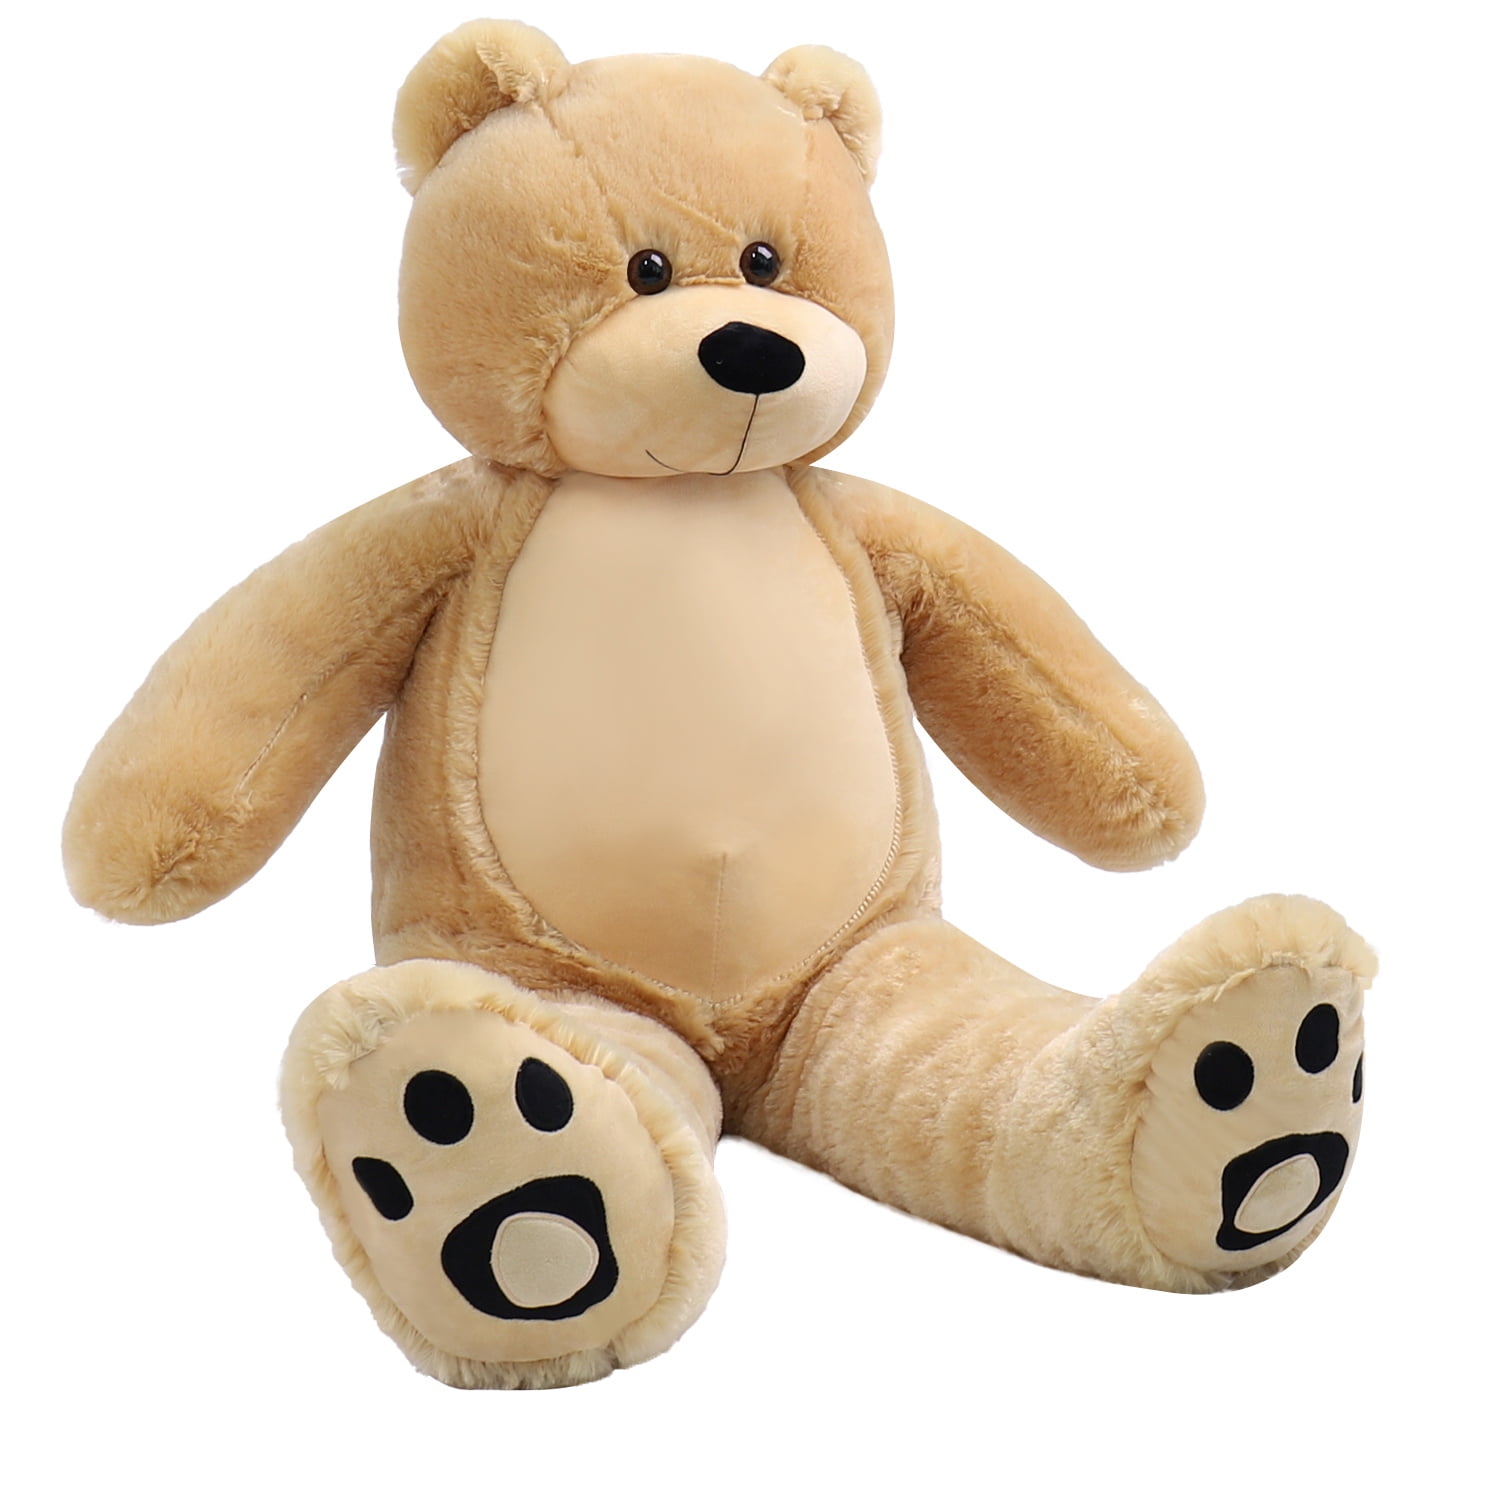 9" Red Plush Teddy Bear Stuffed Animal Toy Gift New 